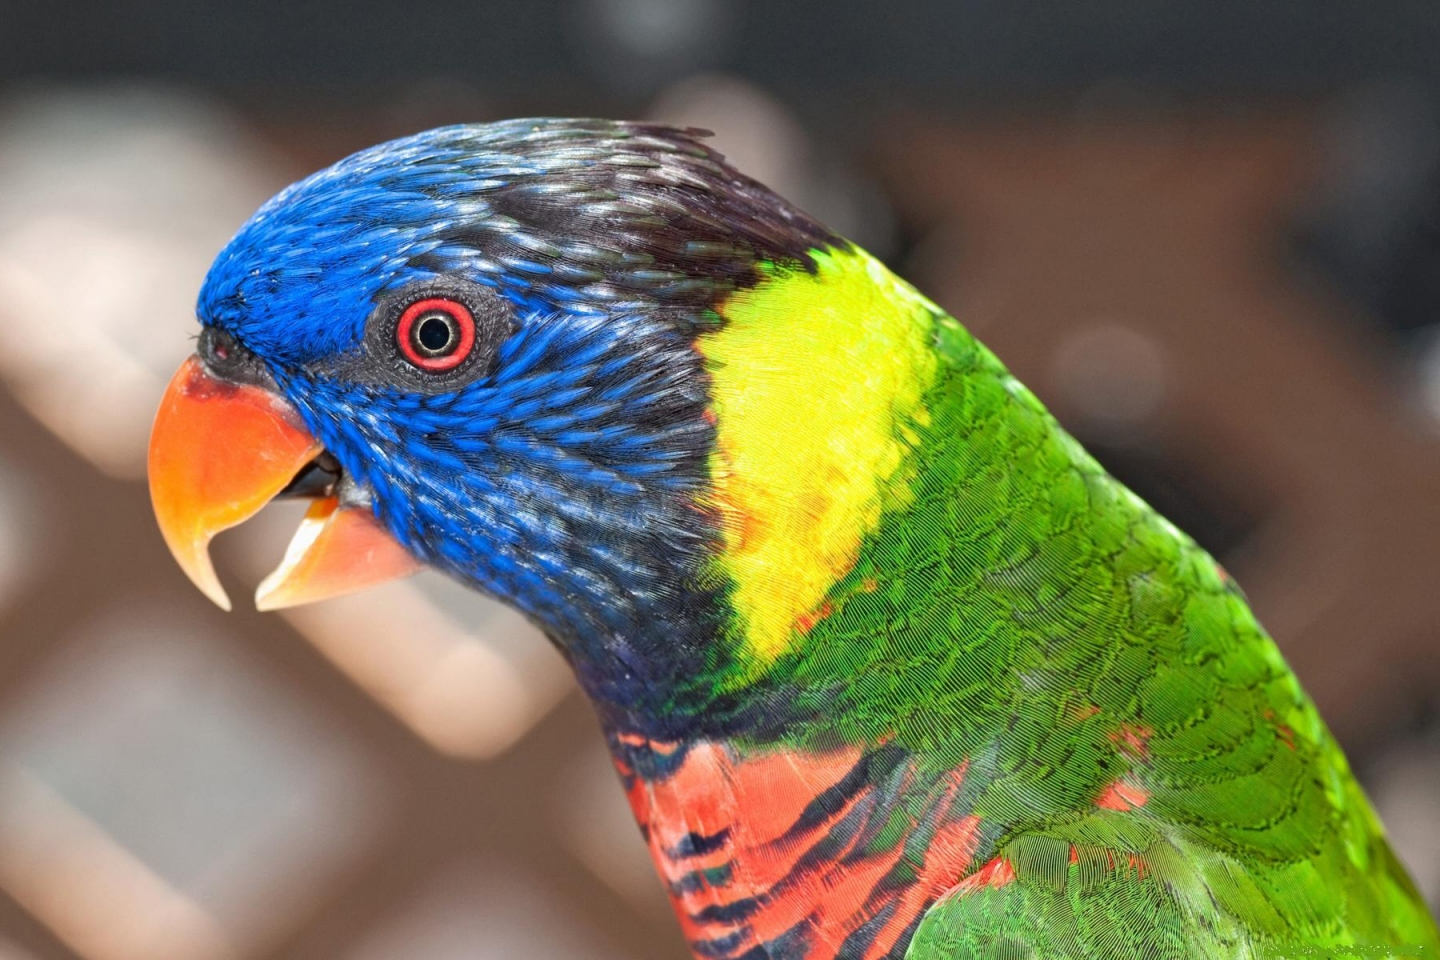 Rainbow Lorikeet Parrot Close Up 3:2